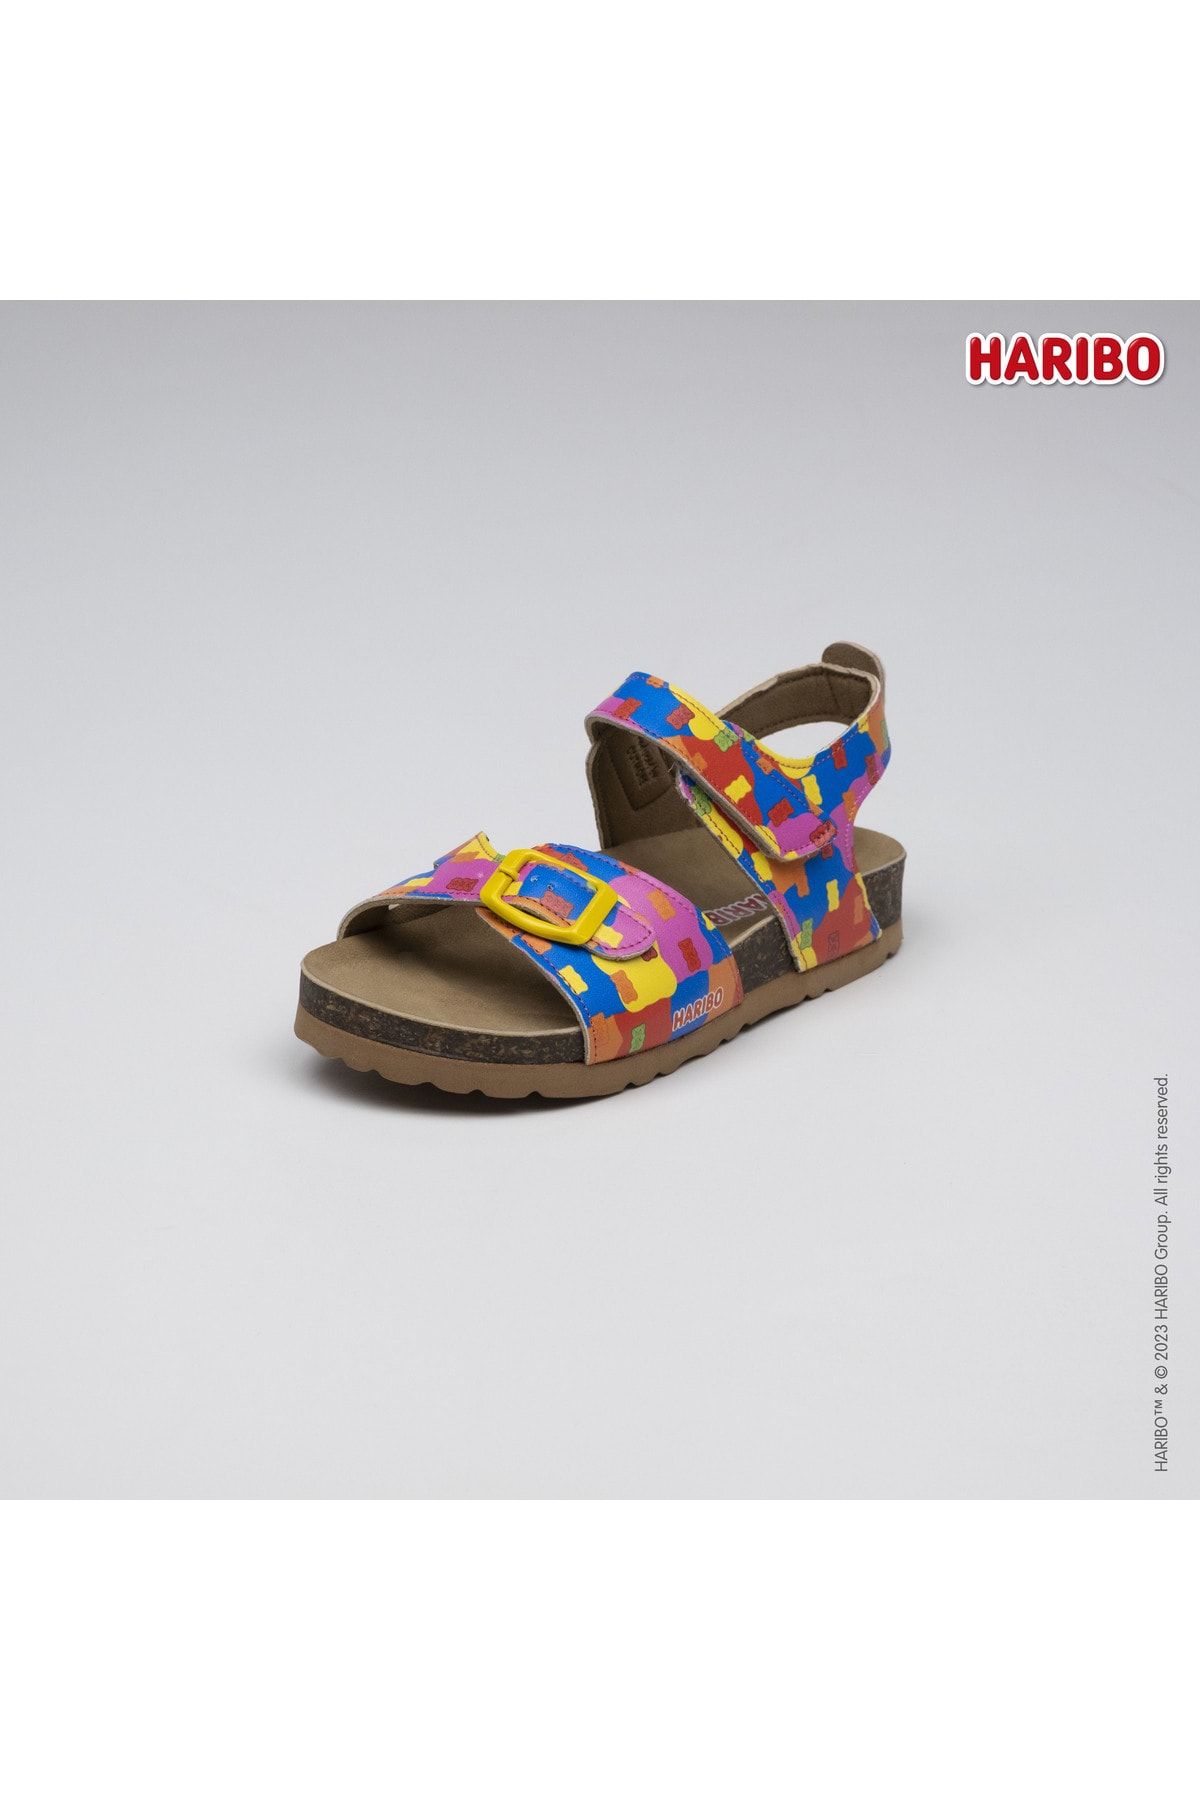 Haribo Ankle Buckled Çocuk Sandalet